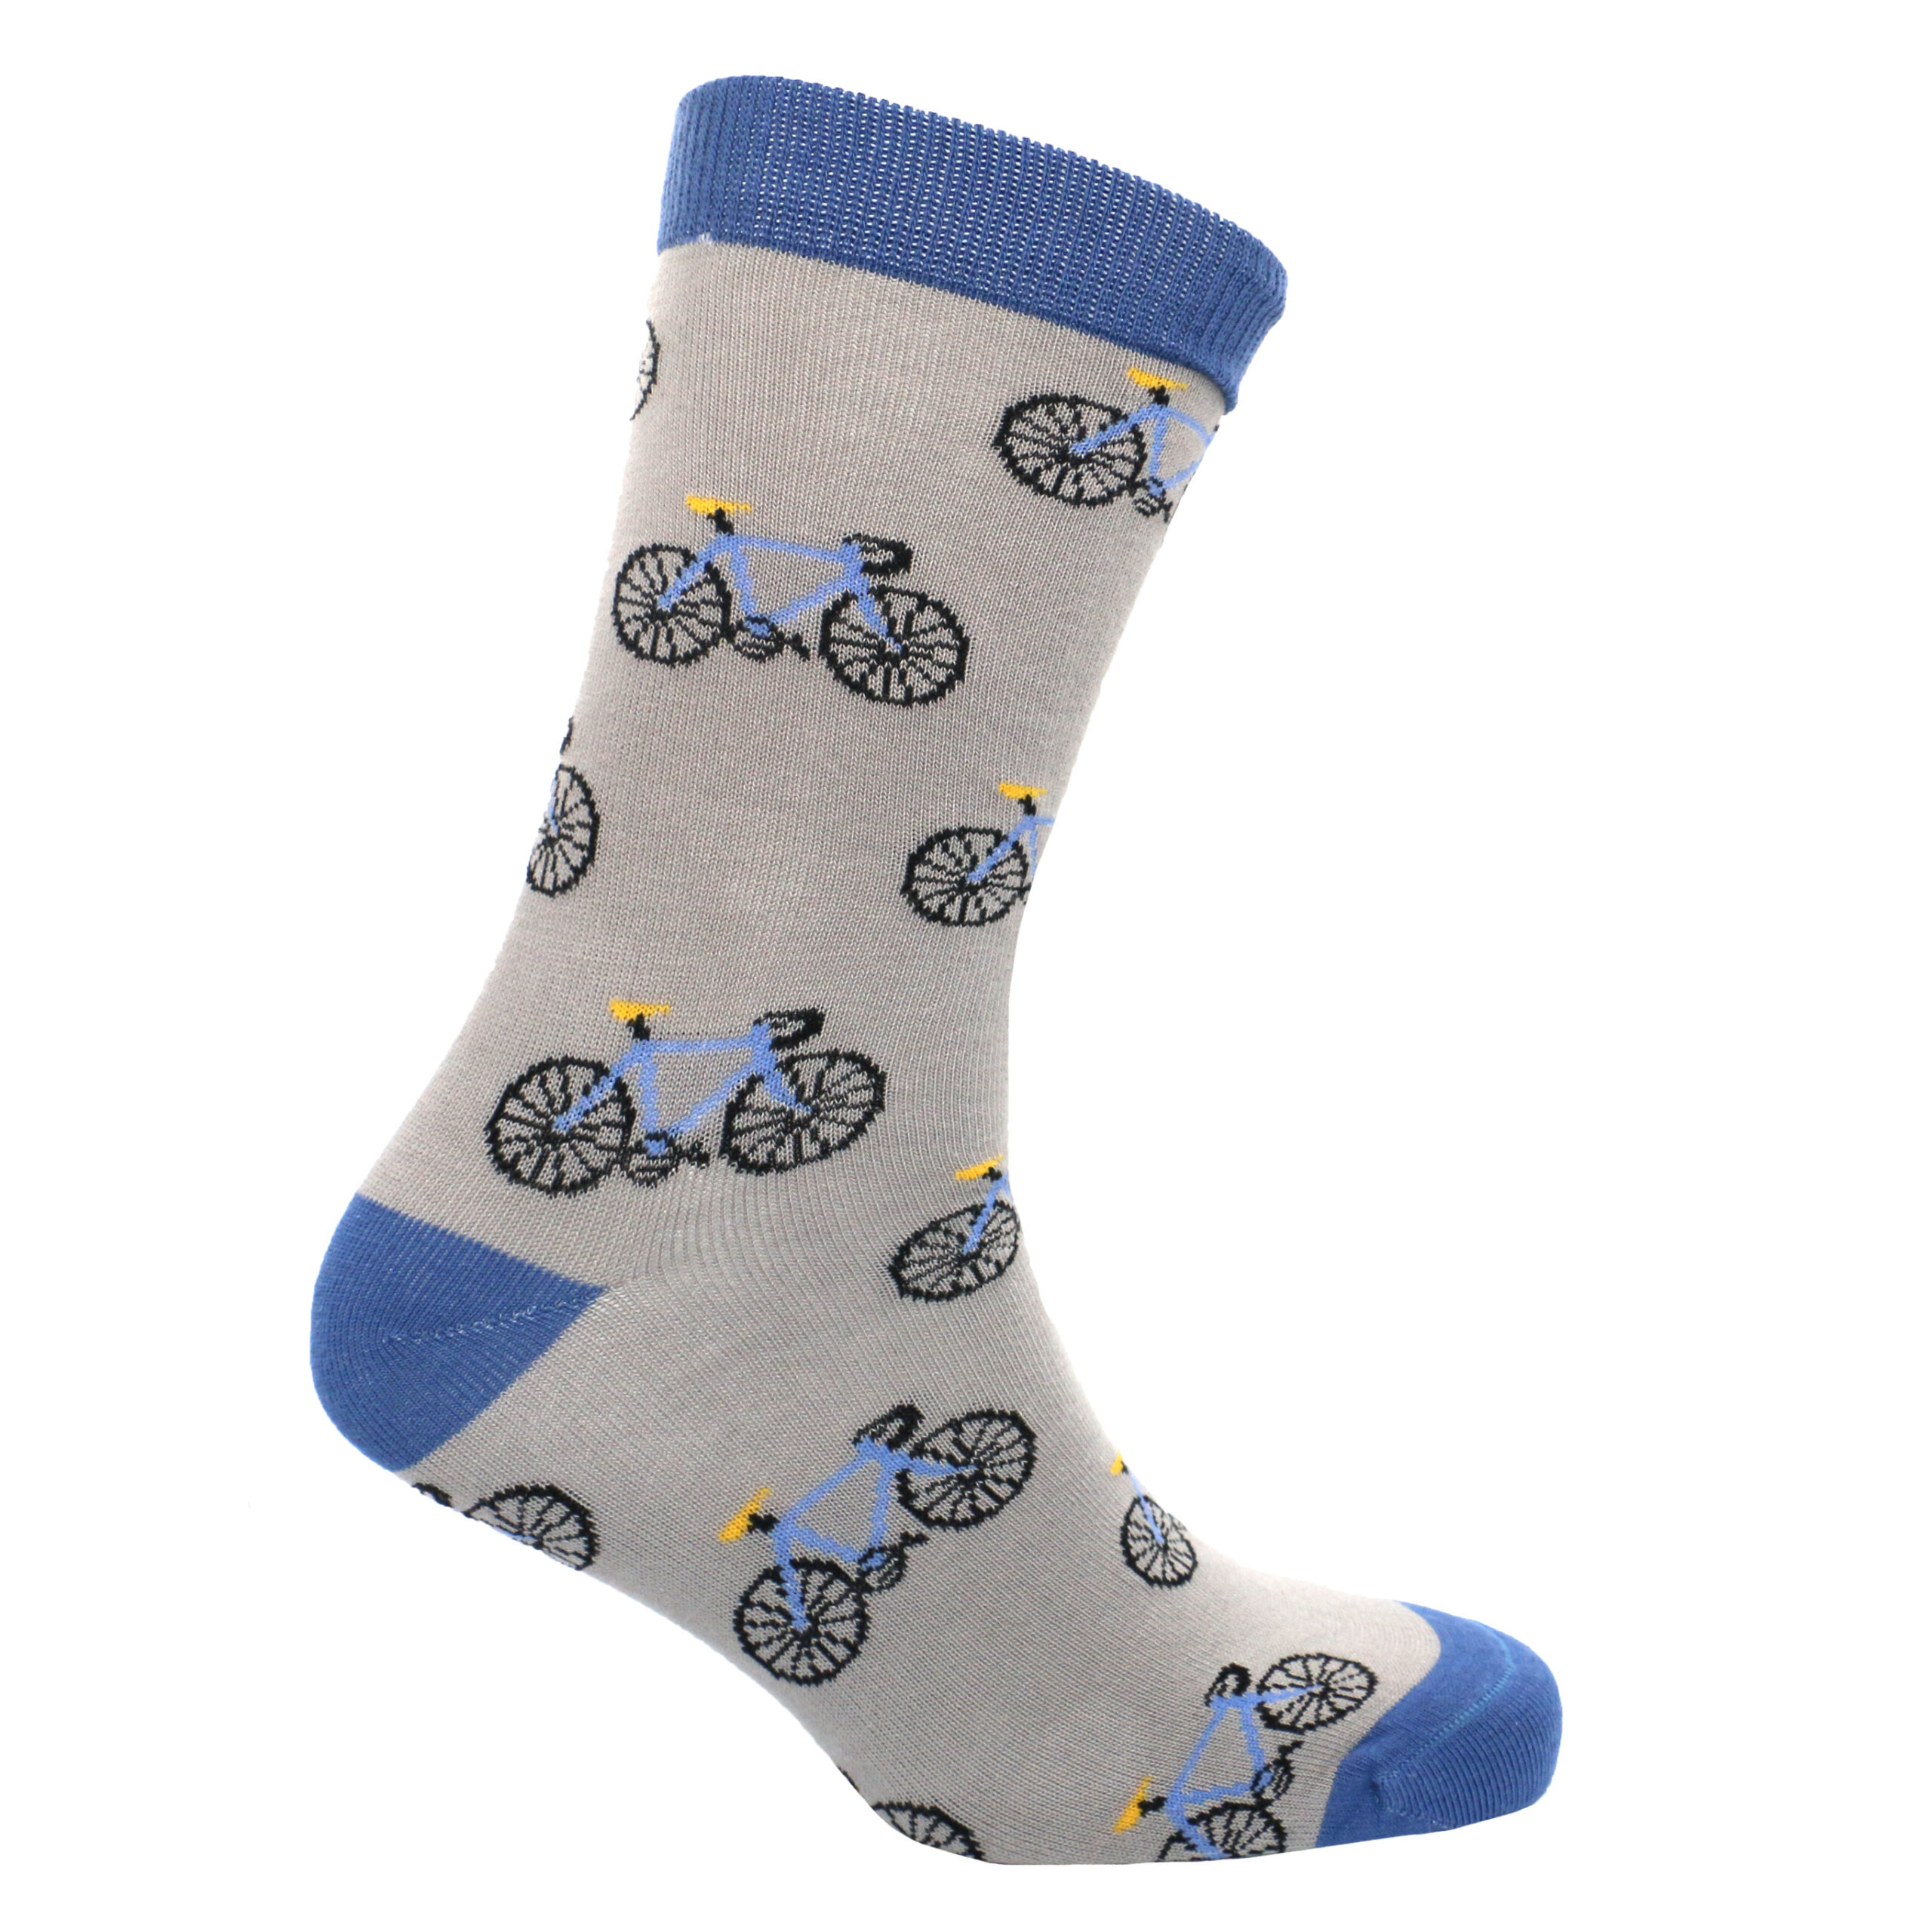 Bicycle Socks - Black and Grey Combed Cotton - Dalaco